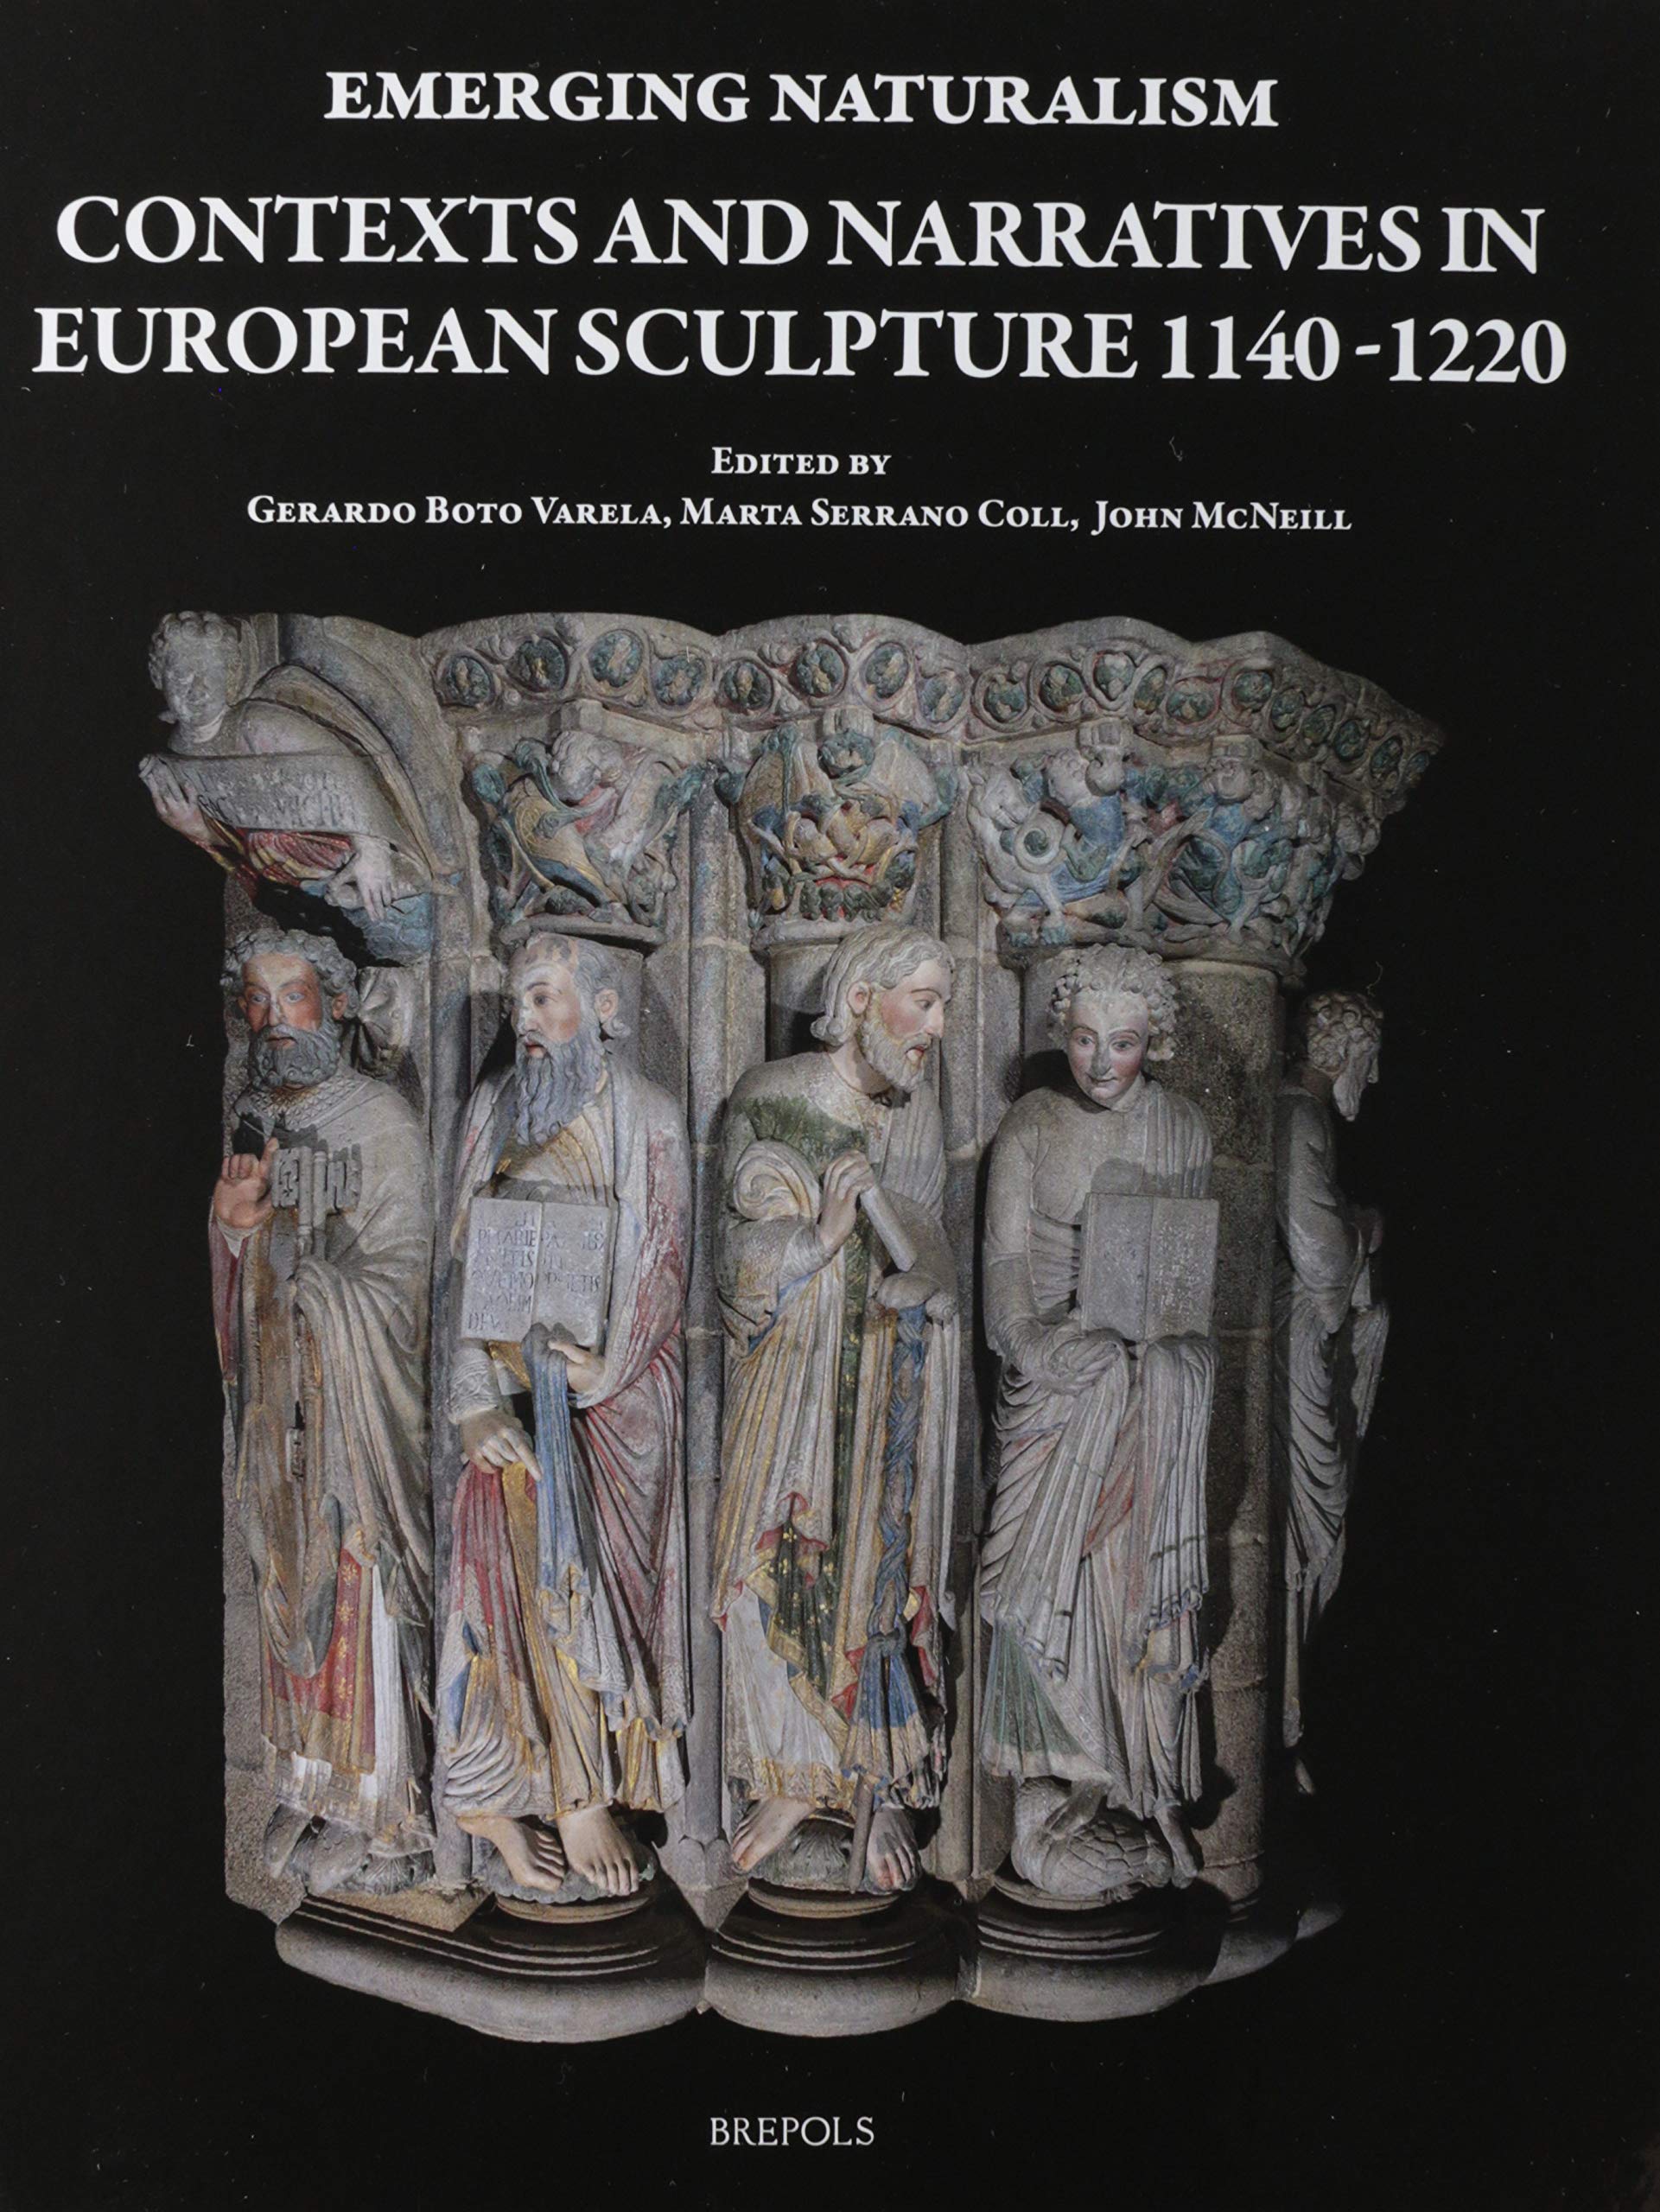 Emerging Naturalism. Contexts and Narratives in European Sculpture 1140-1220, 2020, 436 p., 156 ill.